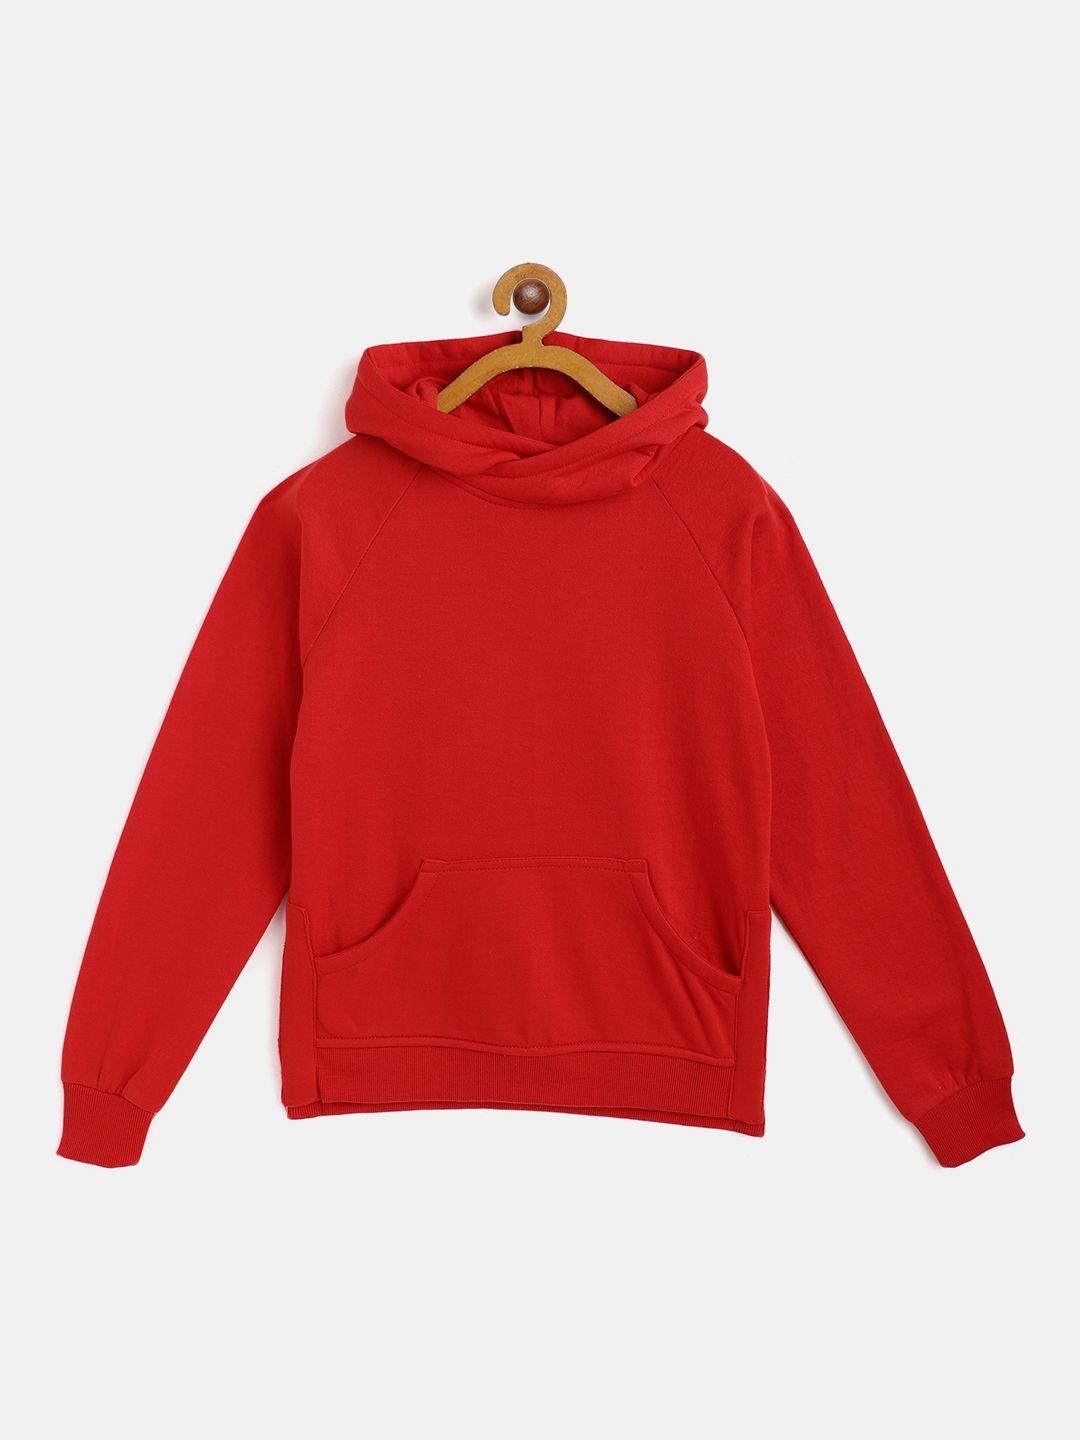 belle fille unisex kids red hooded sweatshirt